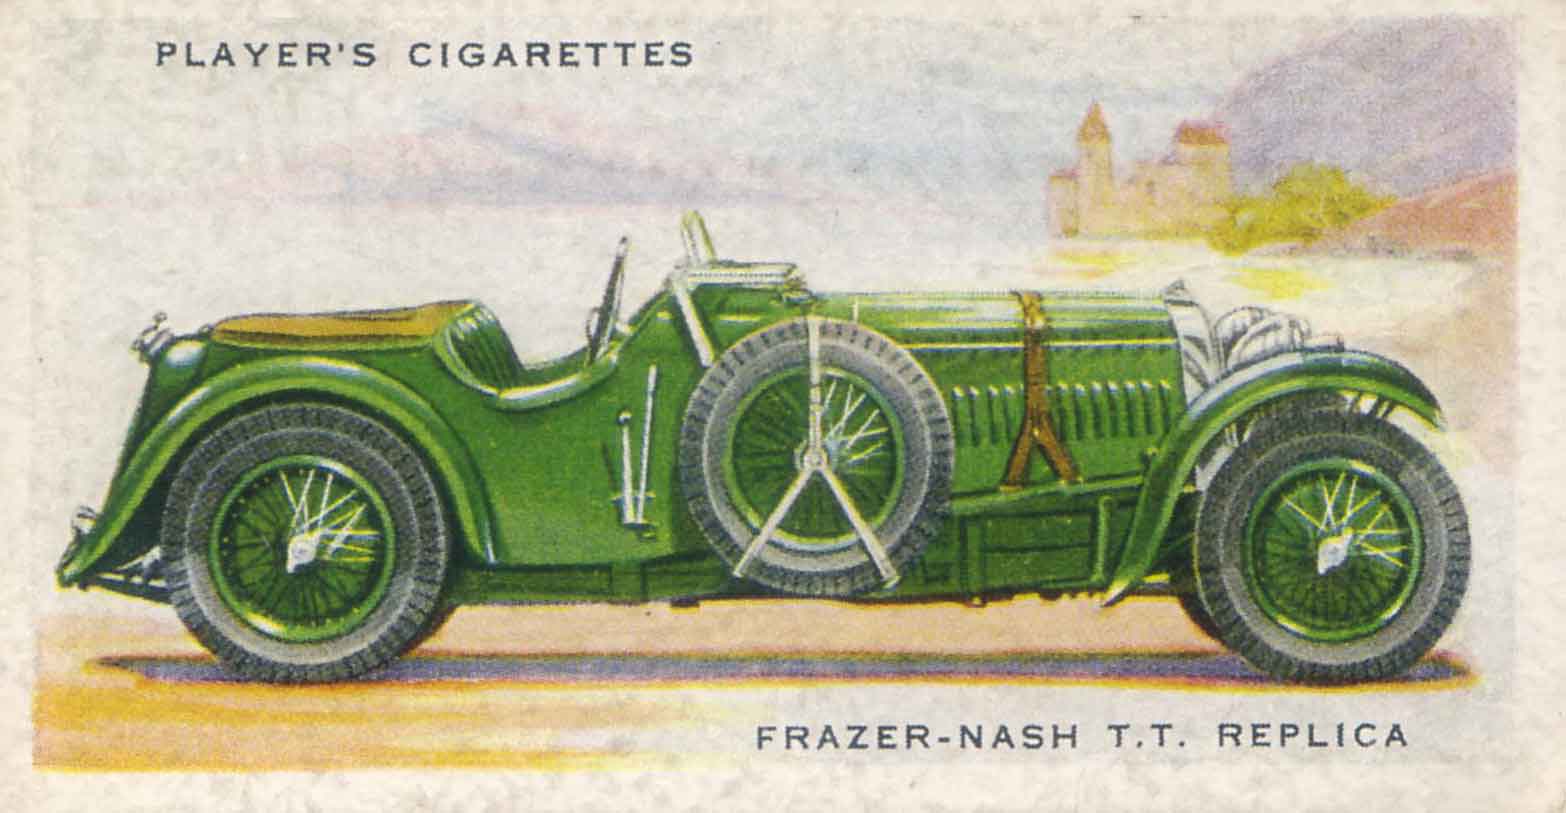 Frazer-Nash T-T Replica sports car. 1937 cigarette card.